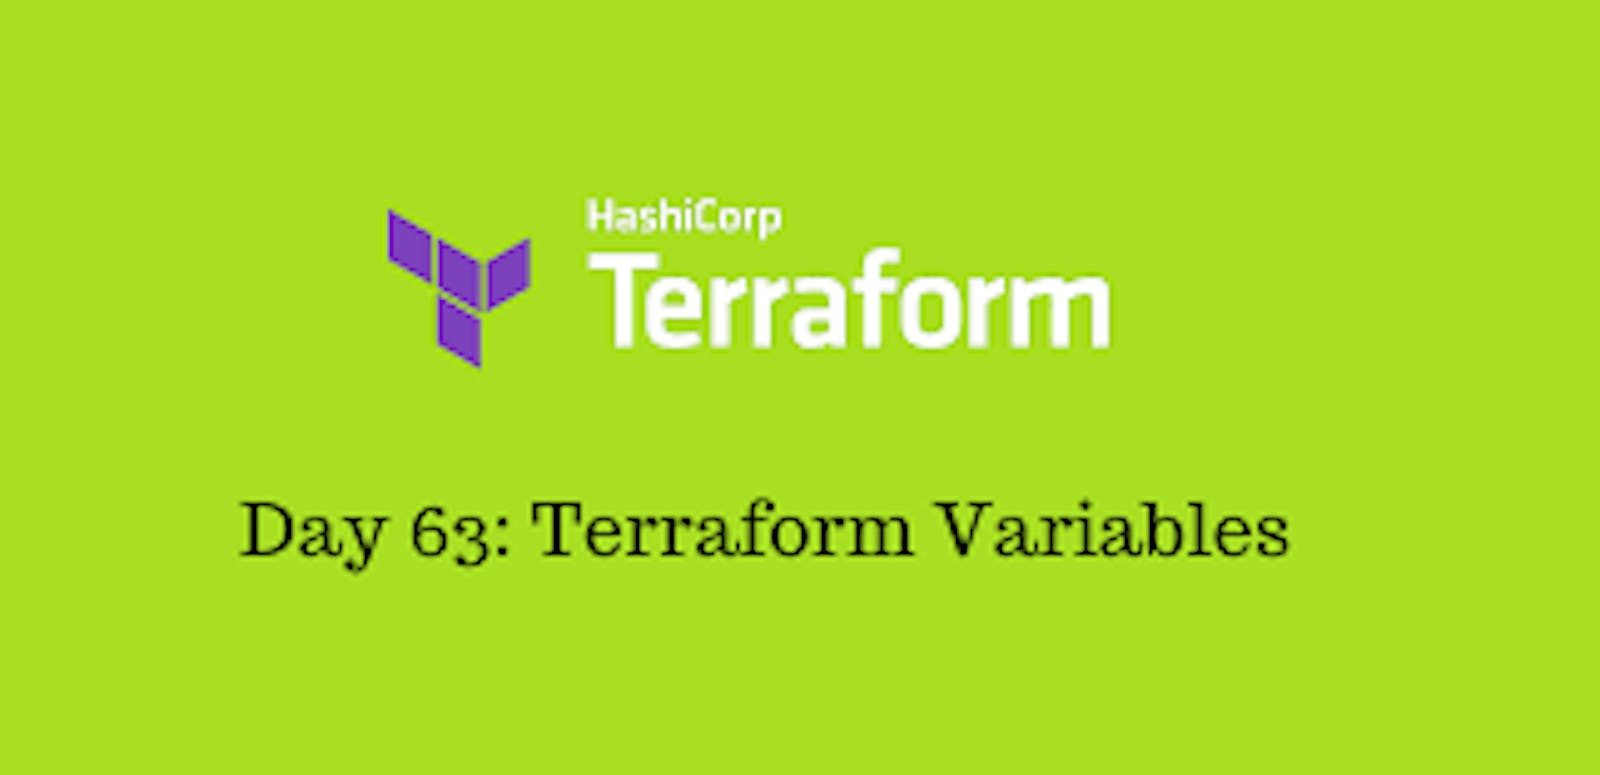 Day 63 - Terraform Variables